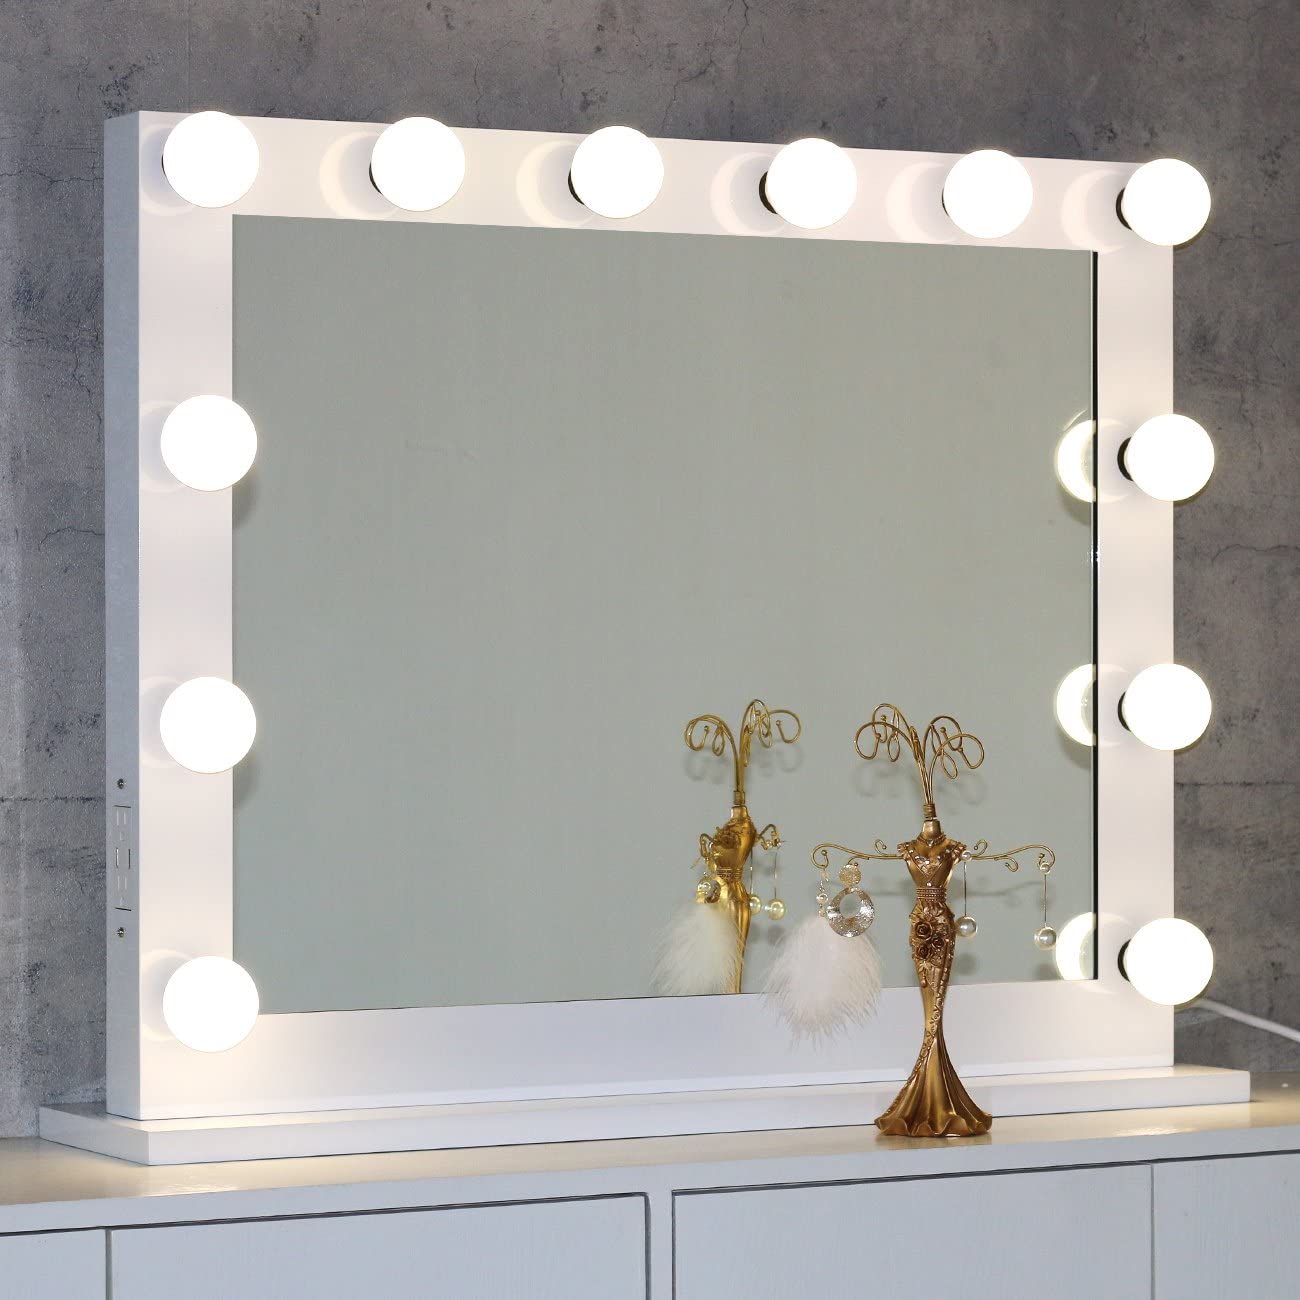 Top 7 Best Light Up Vanity Mirrors, Best Tabletop Vanity Mirror With Lights